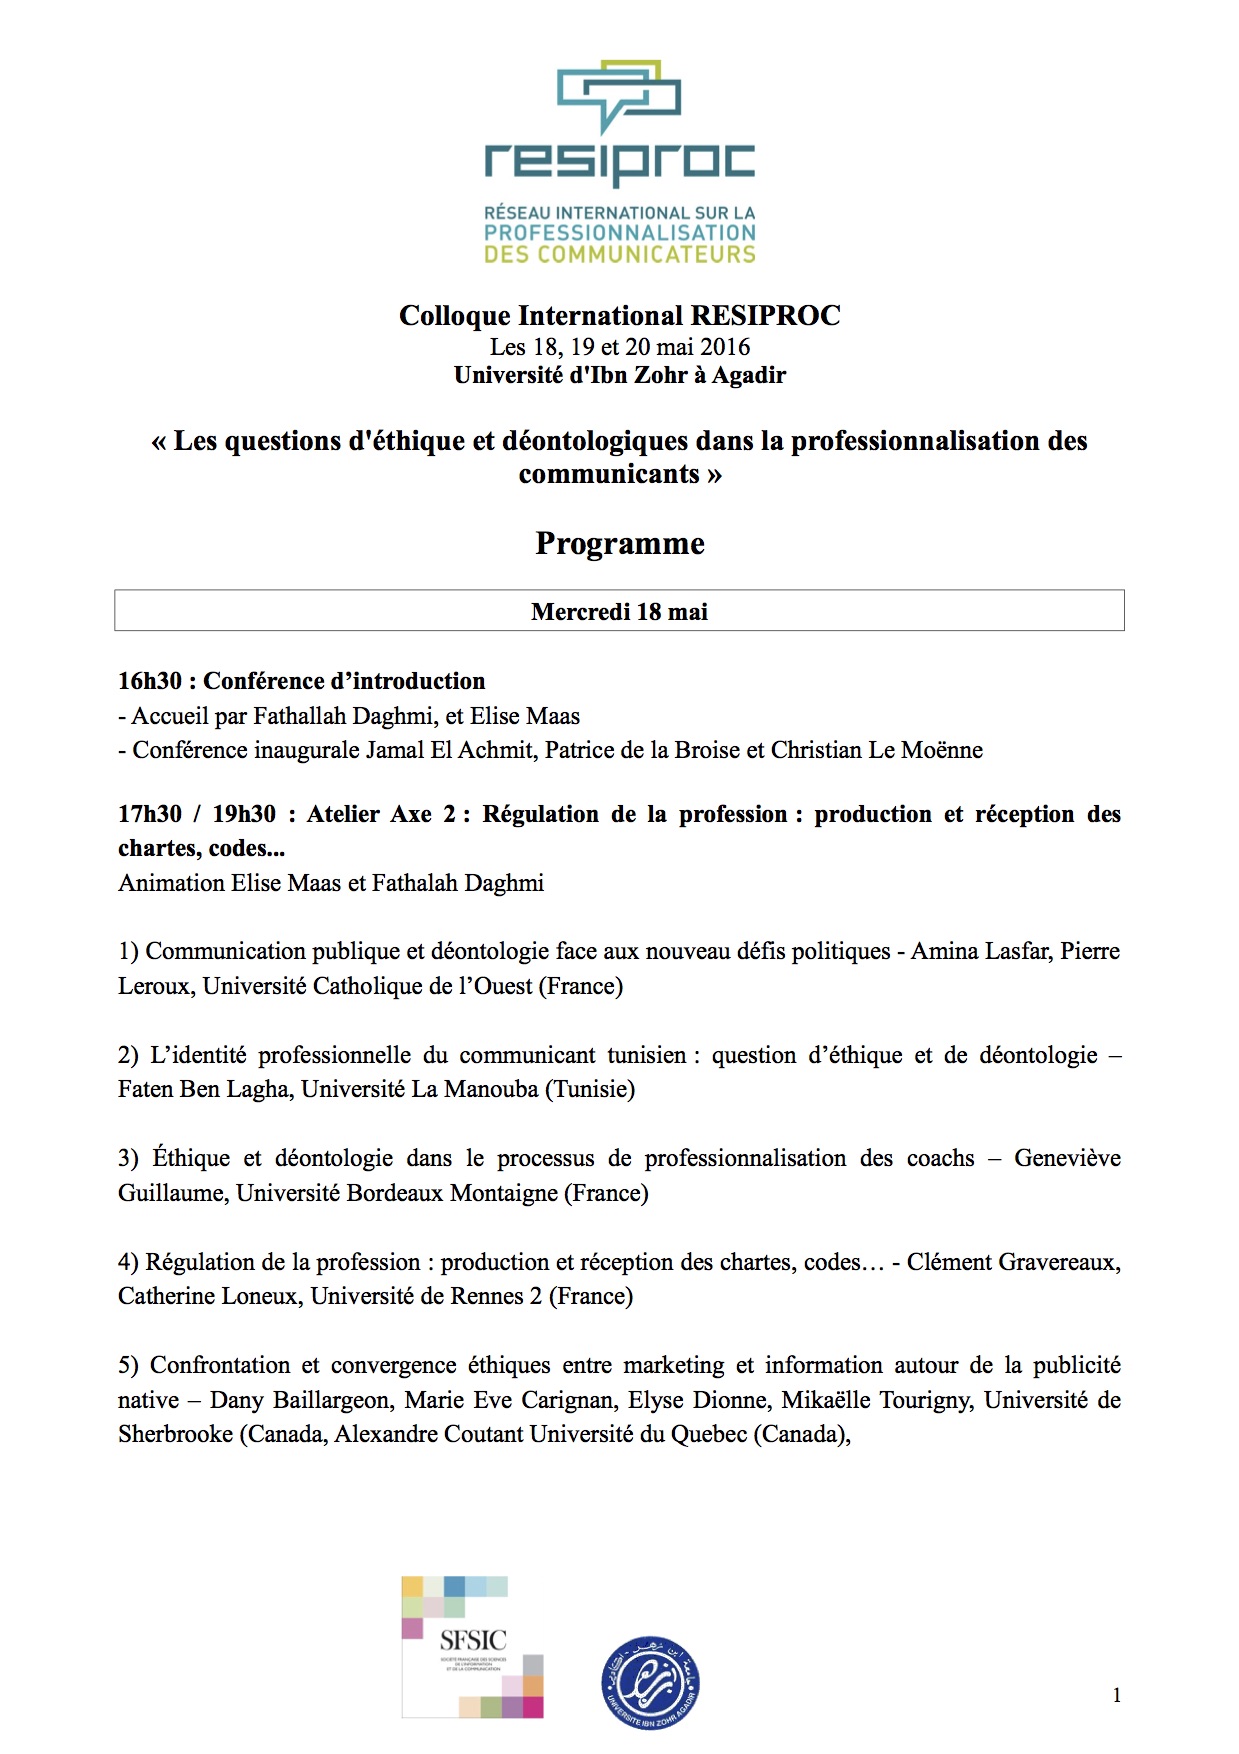 Programme Colloque International RESIPROC[1] - copie